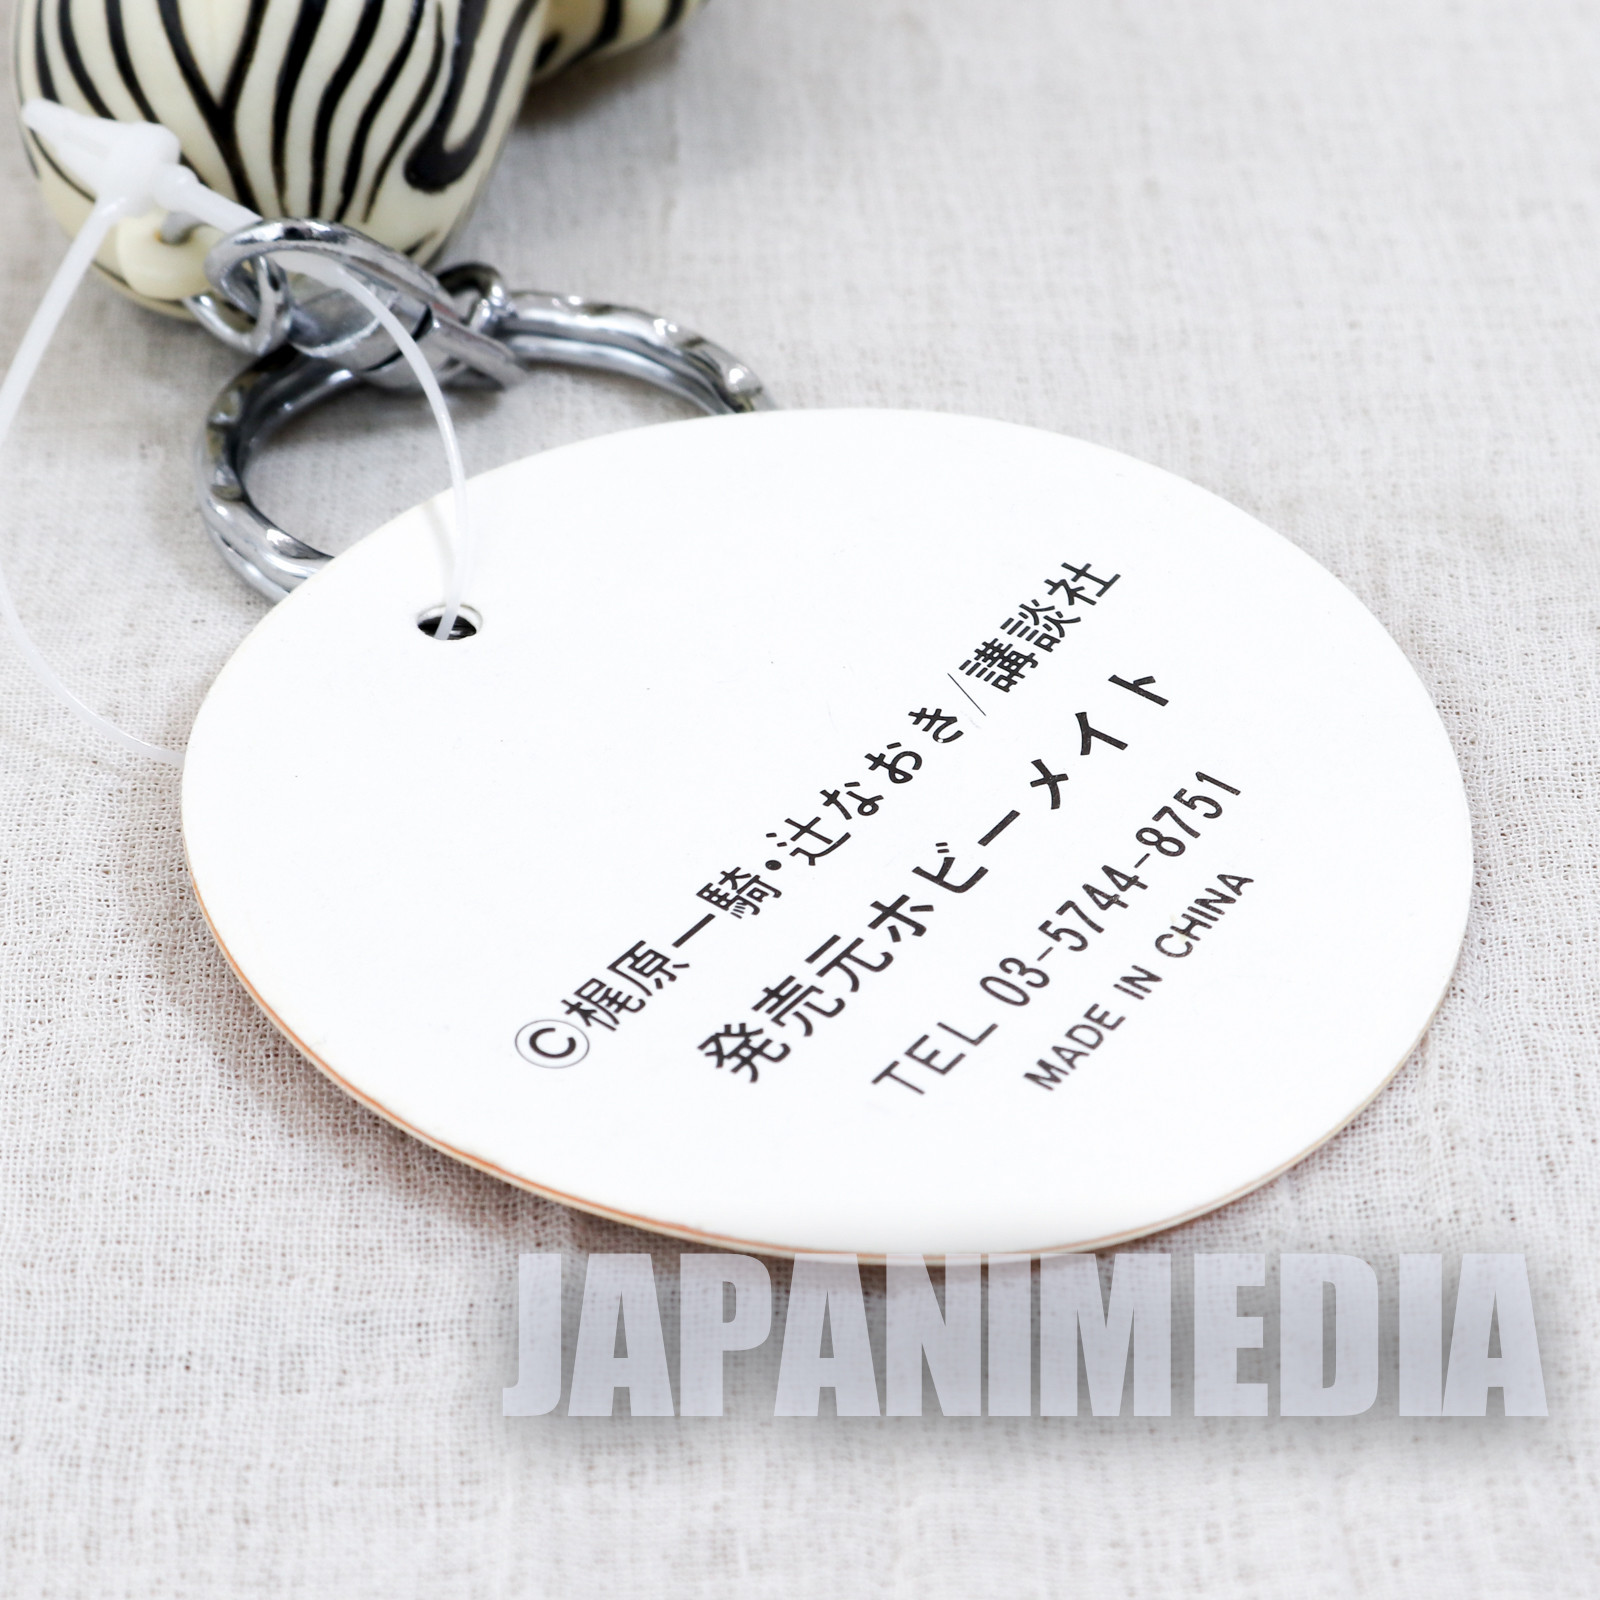 Tiger Mask Zebraman Mascot Figure Key Chain JAPAN ANIME MANGA Pro Wrestling